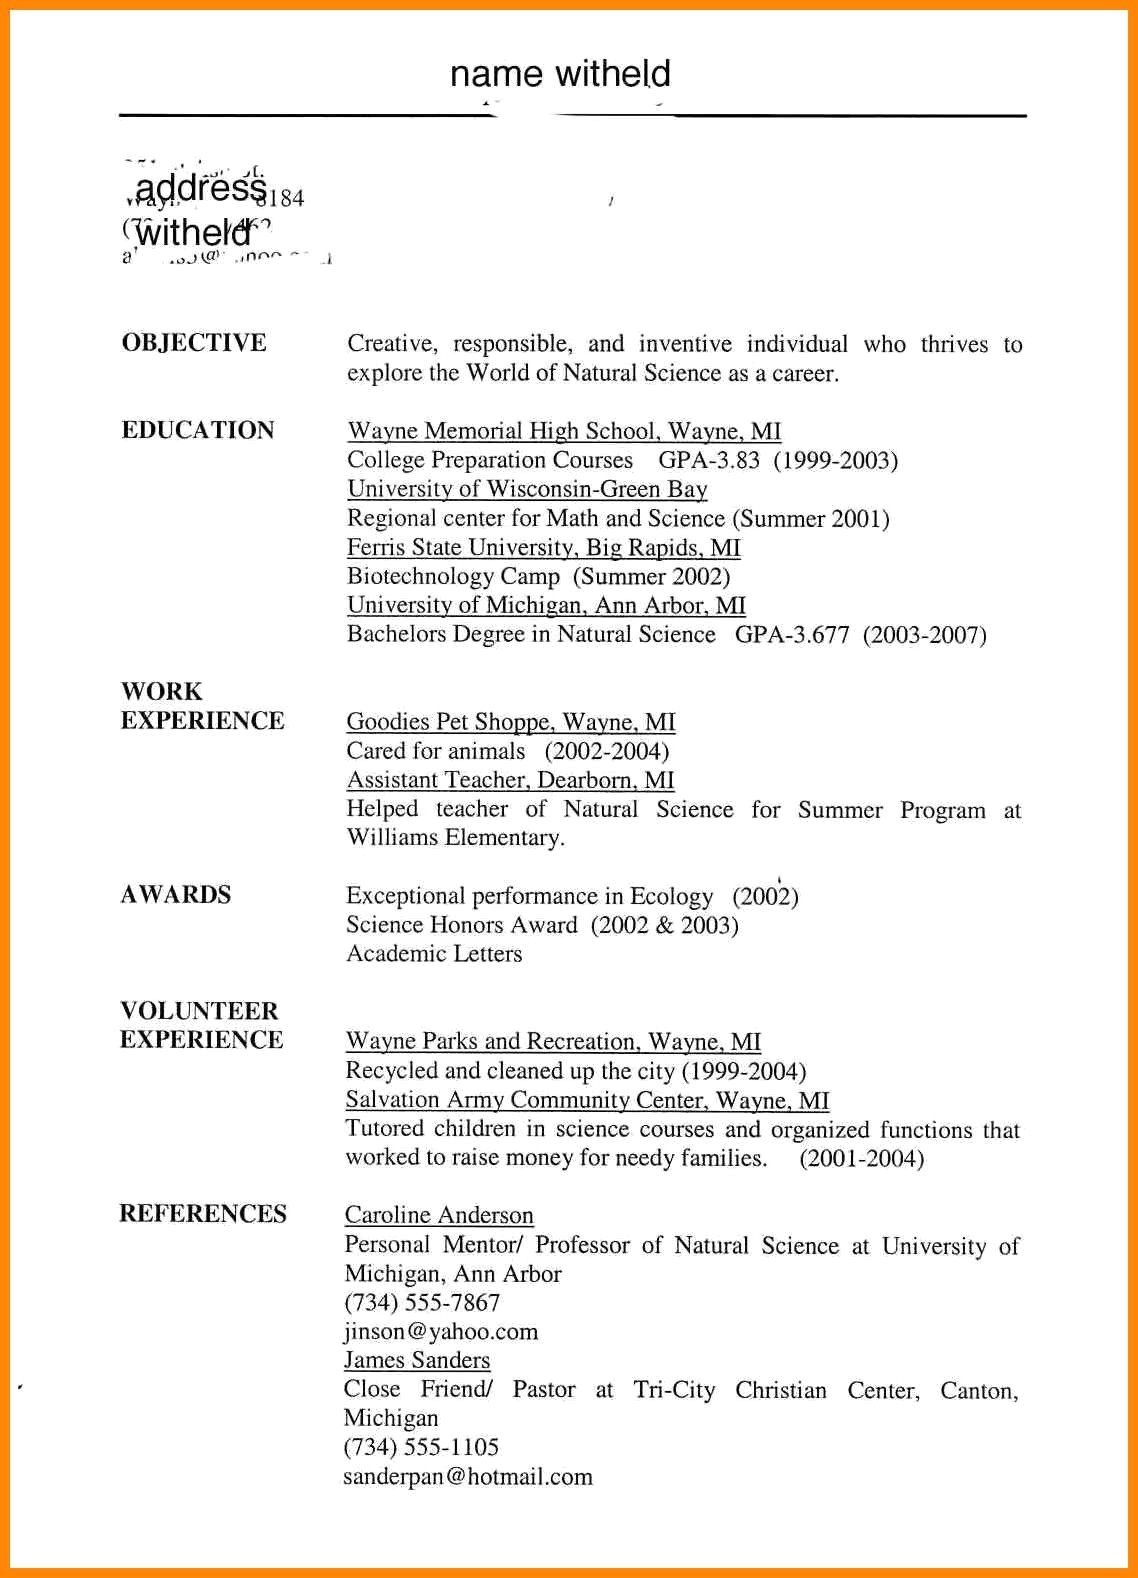 Resume Objective Example 10 High School Student Resume Objective Examples Boy Friend Letters High School Resume Objective Examples resume objective example|wikiresume.com